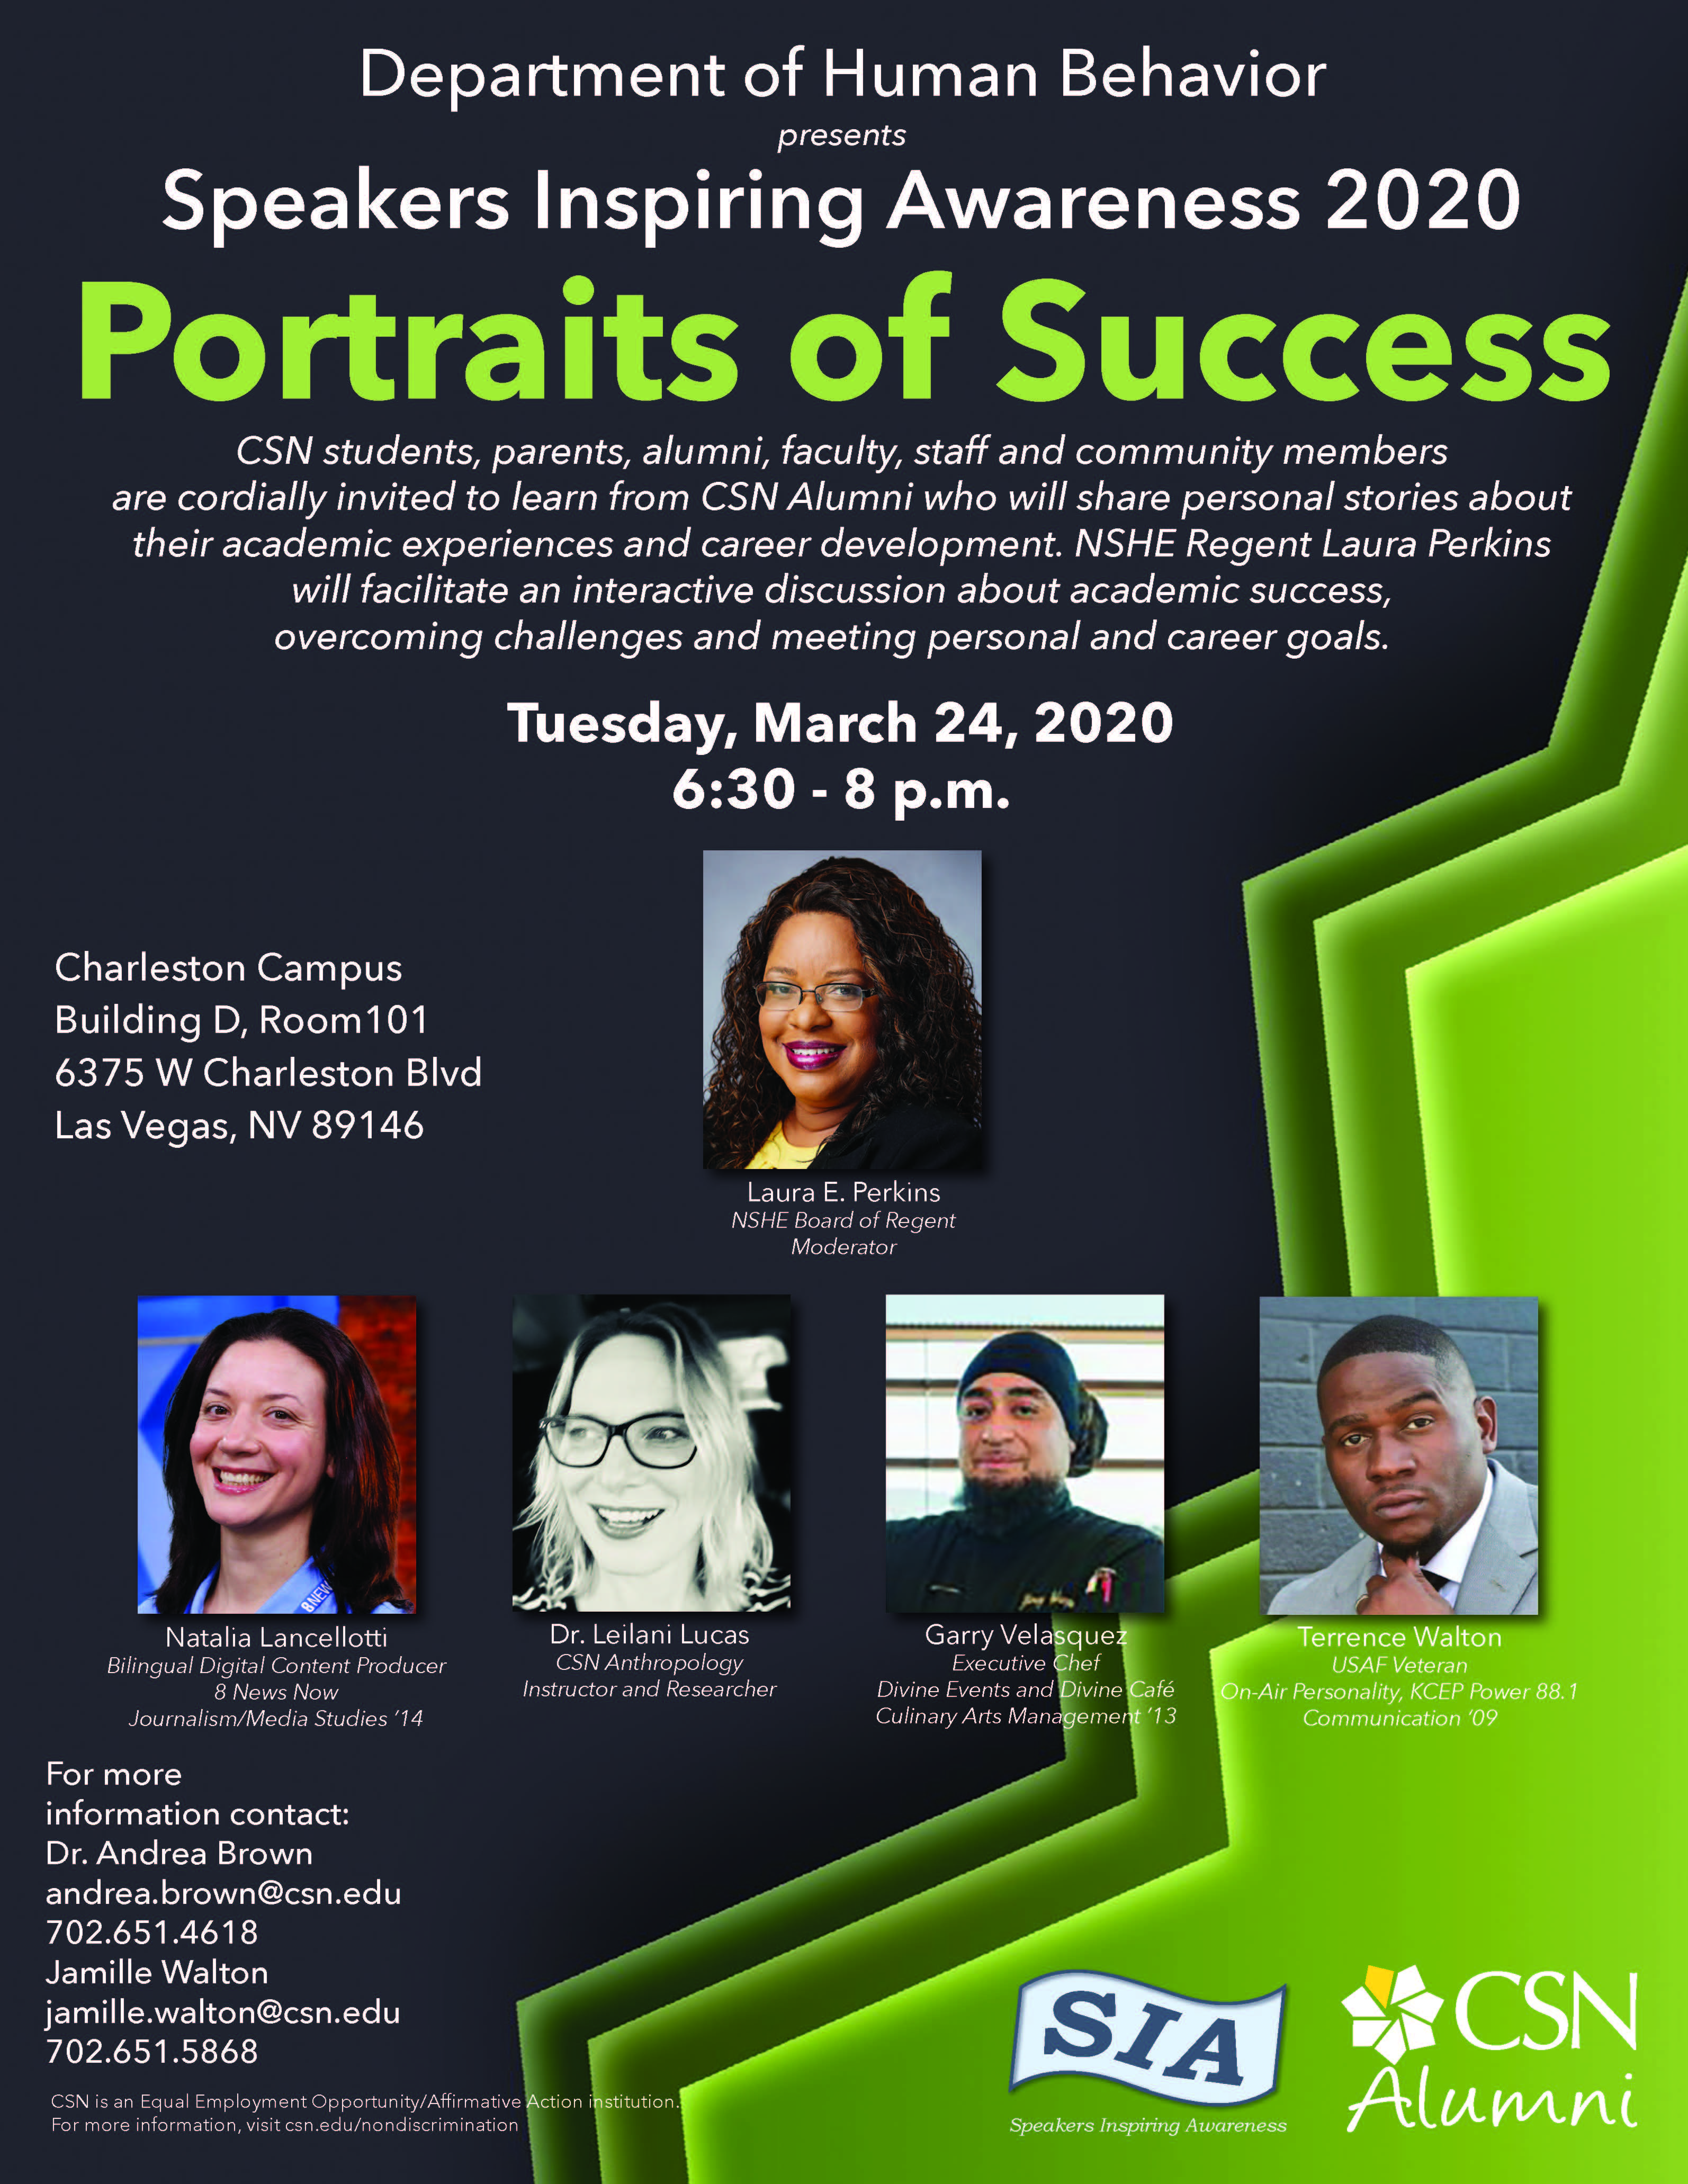 Speaker Inspiring Awareness 2020 Portraits of Success Flyer